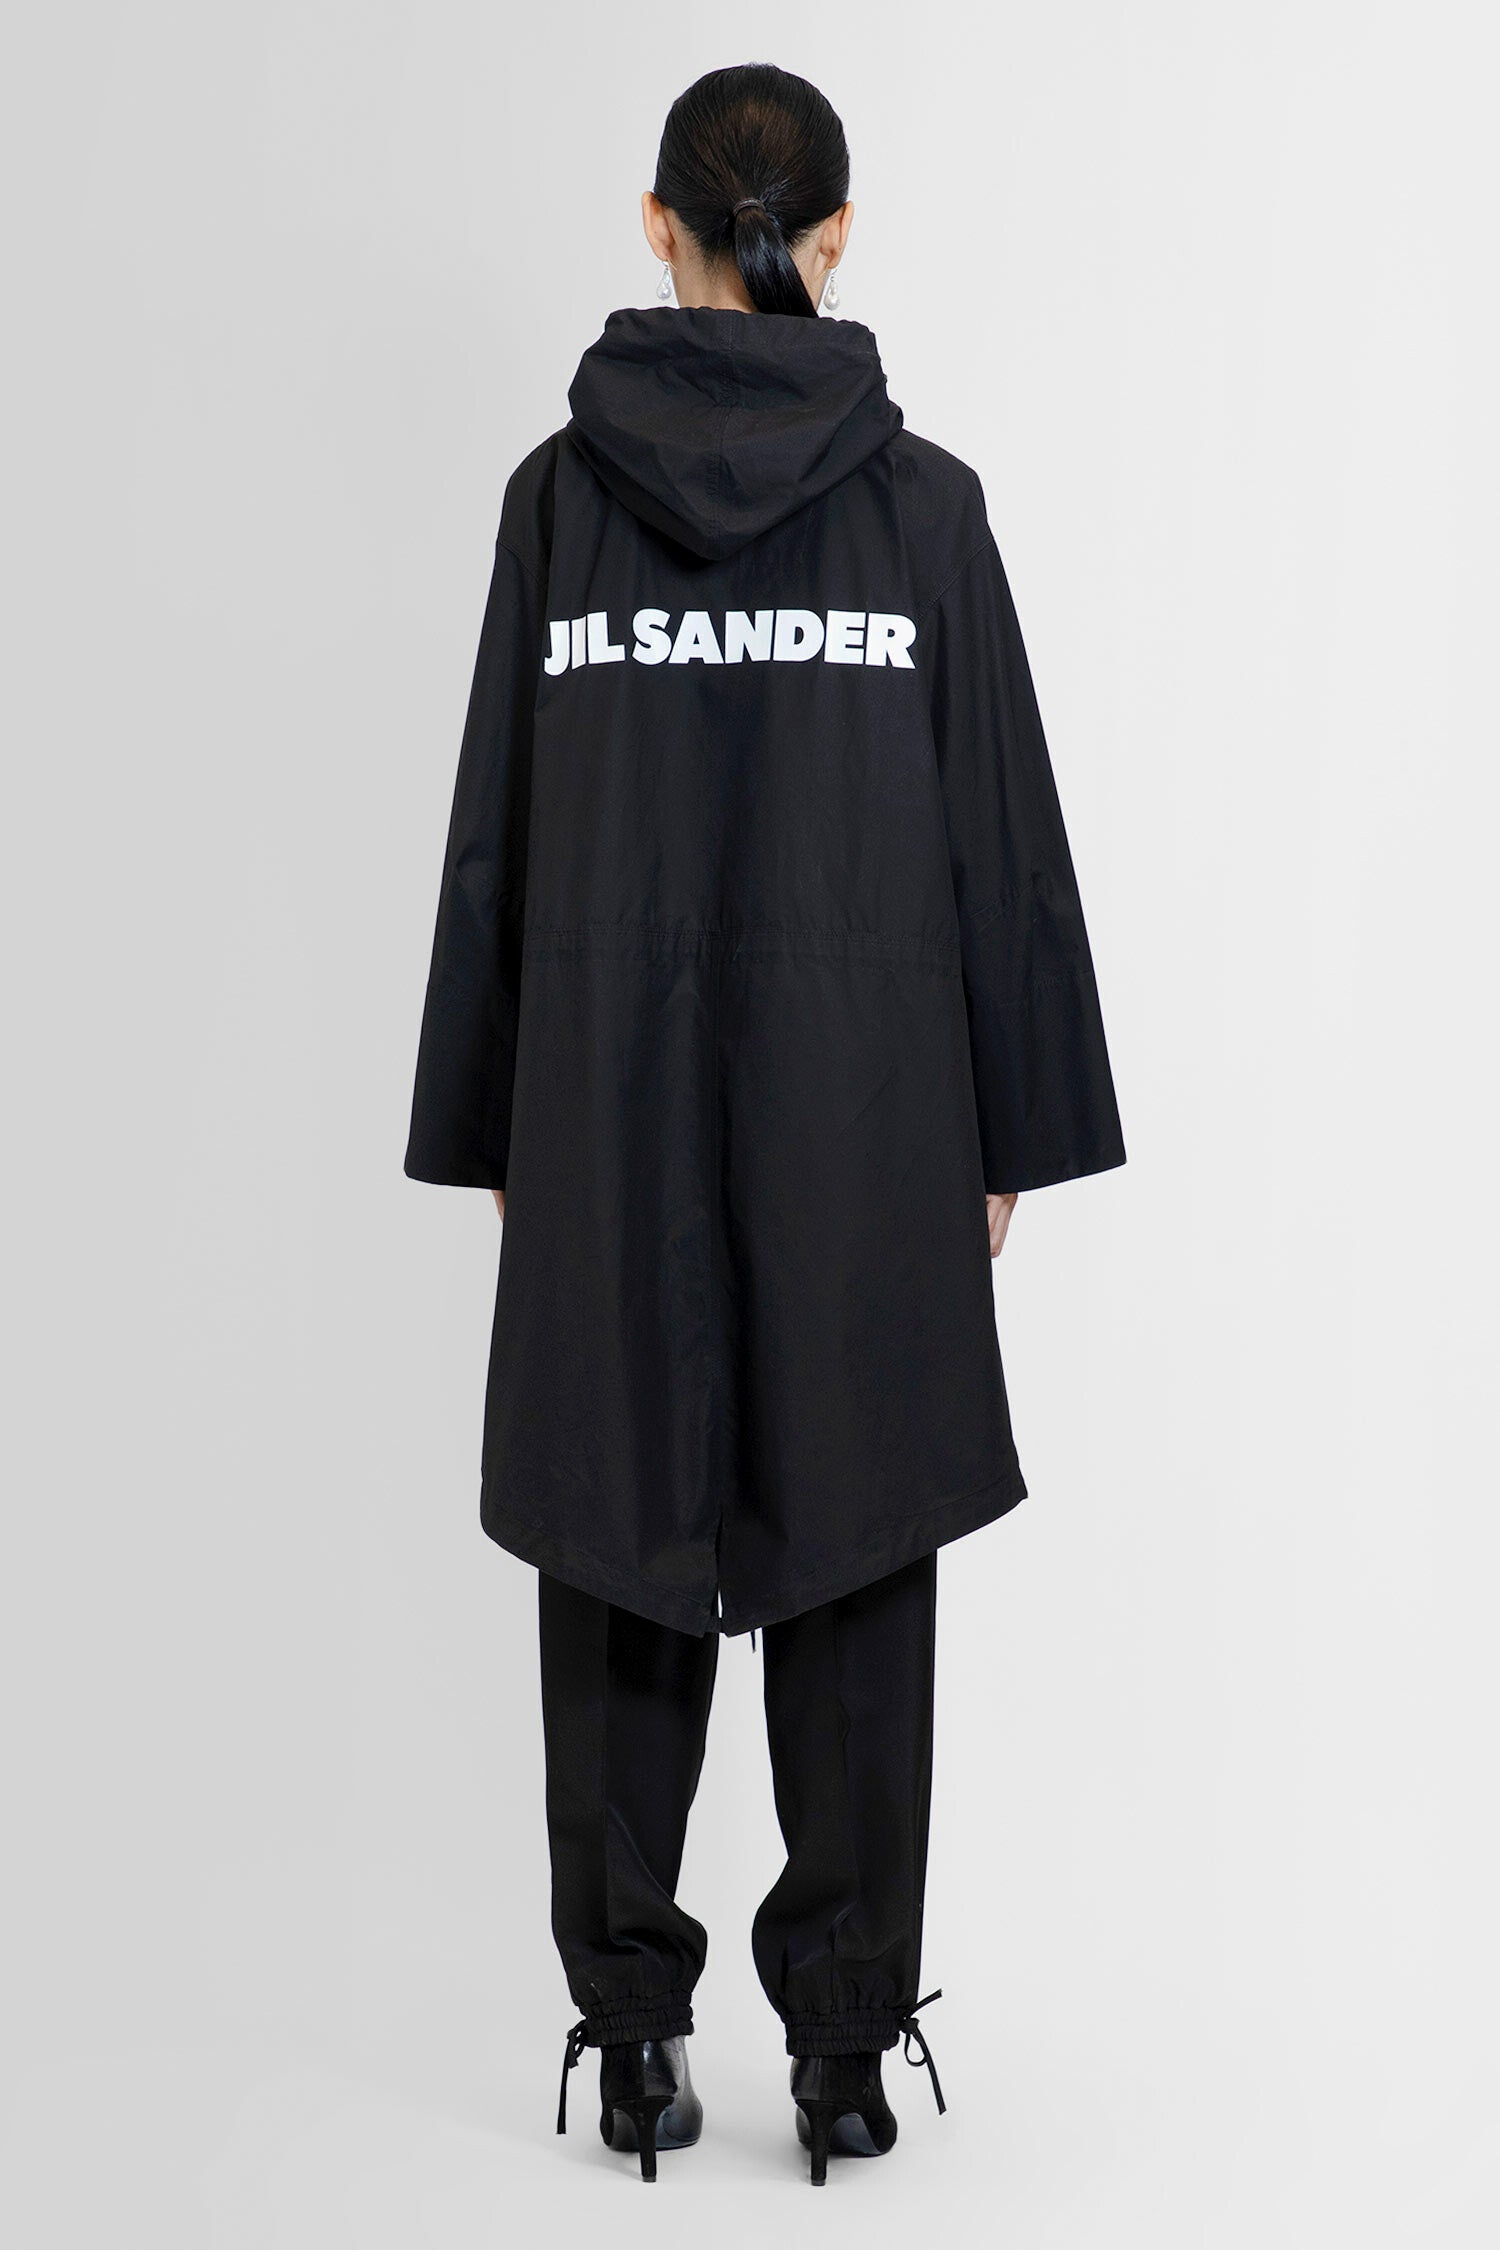 JIL SANDER WOMAN BLACK COATS